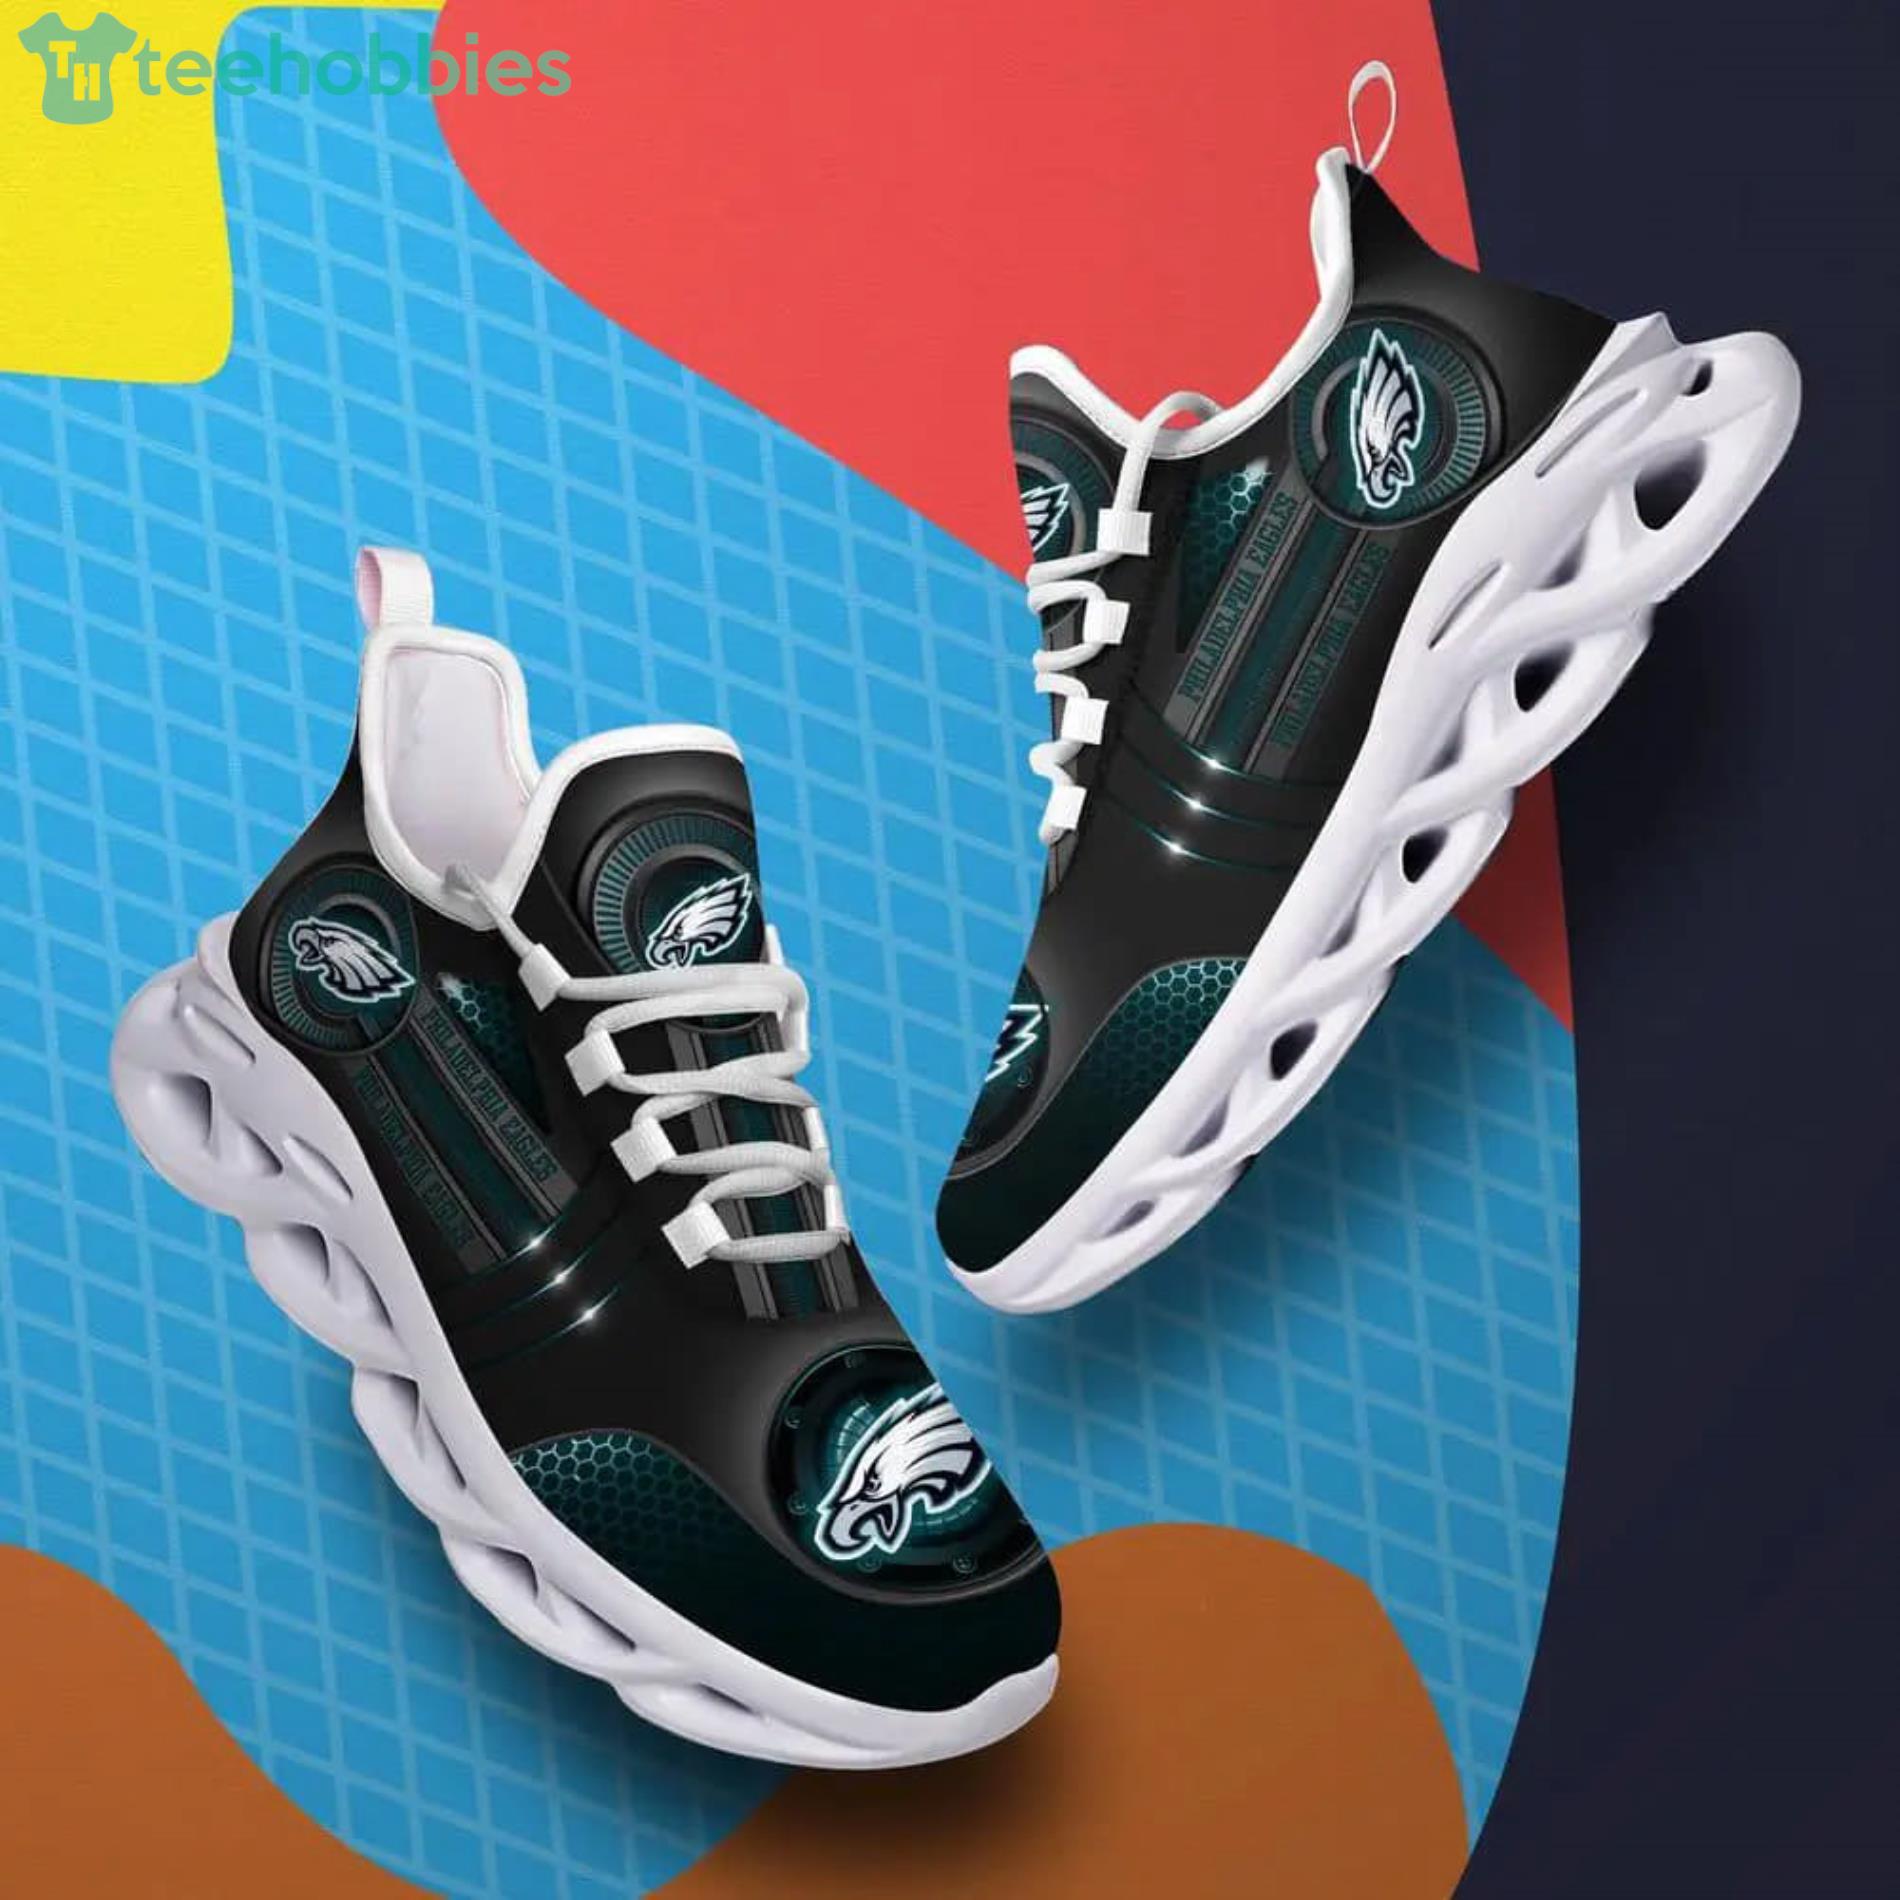 NHL Philadelphia Flyers Running Shoes Design Max Soul Shoes Gift For Men  And Women - Freedomdesign